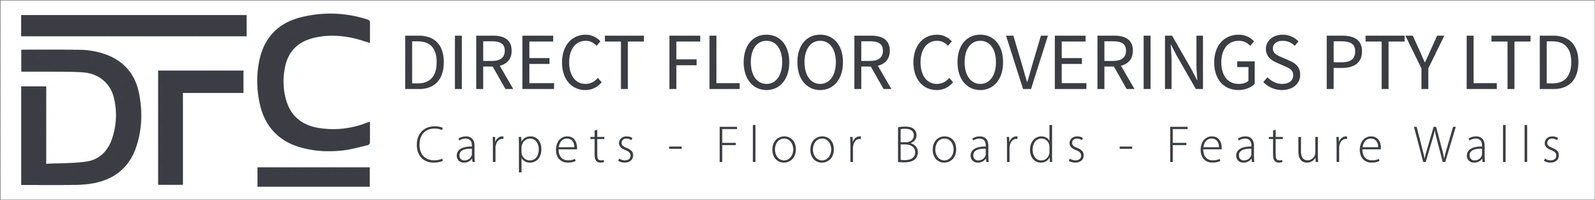 Direct Floor Coverings Pty Ltd